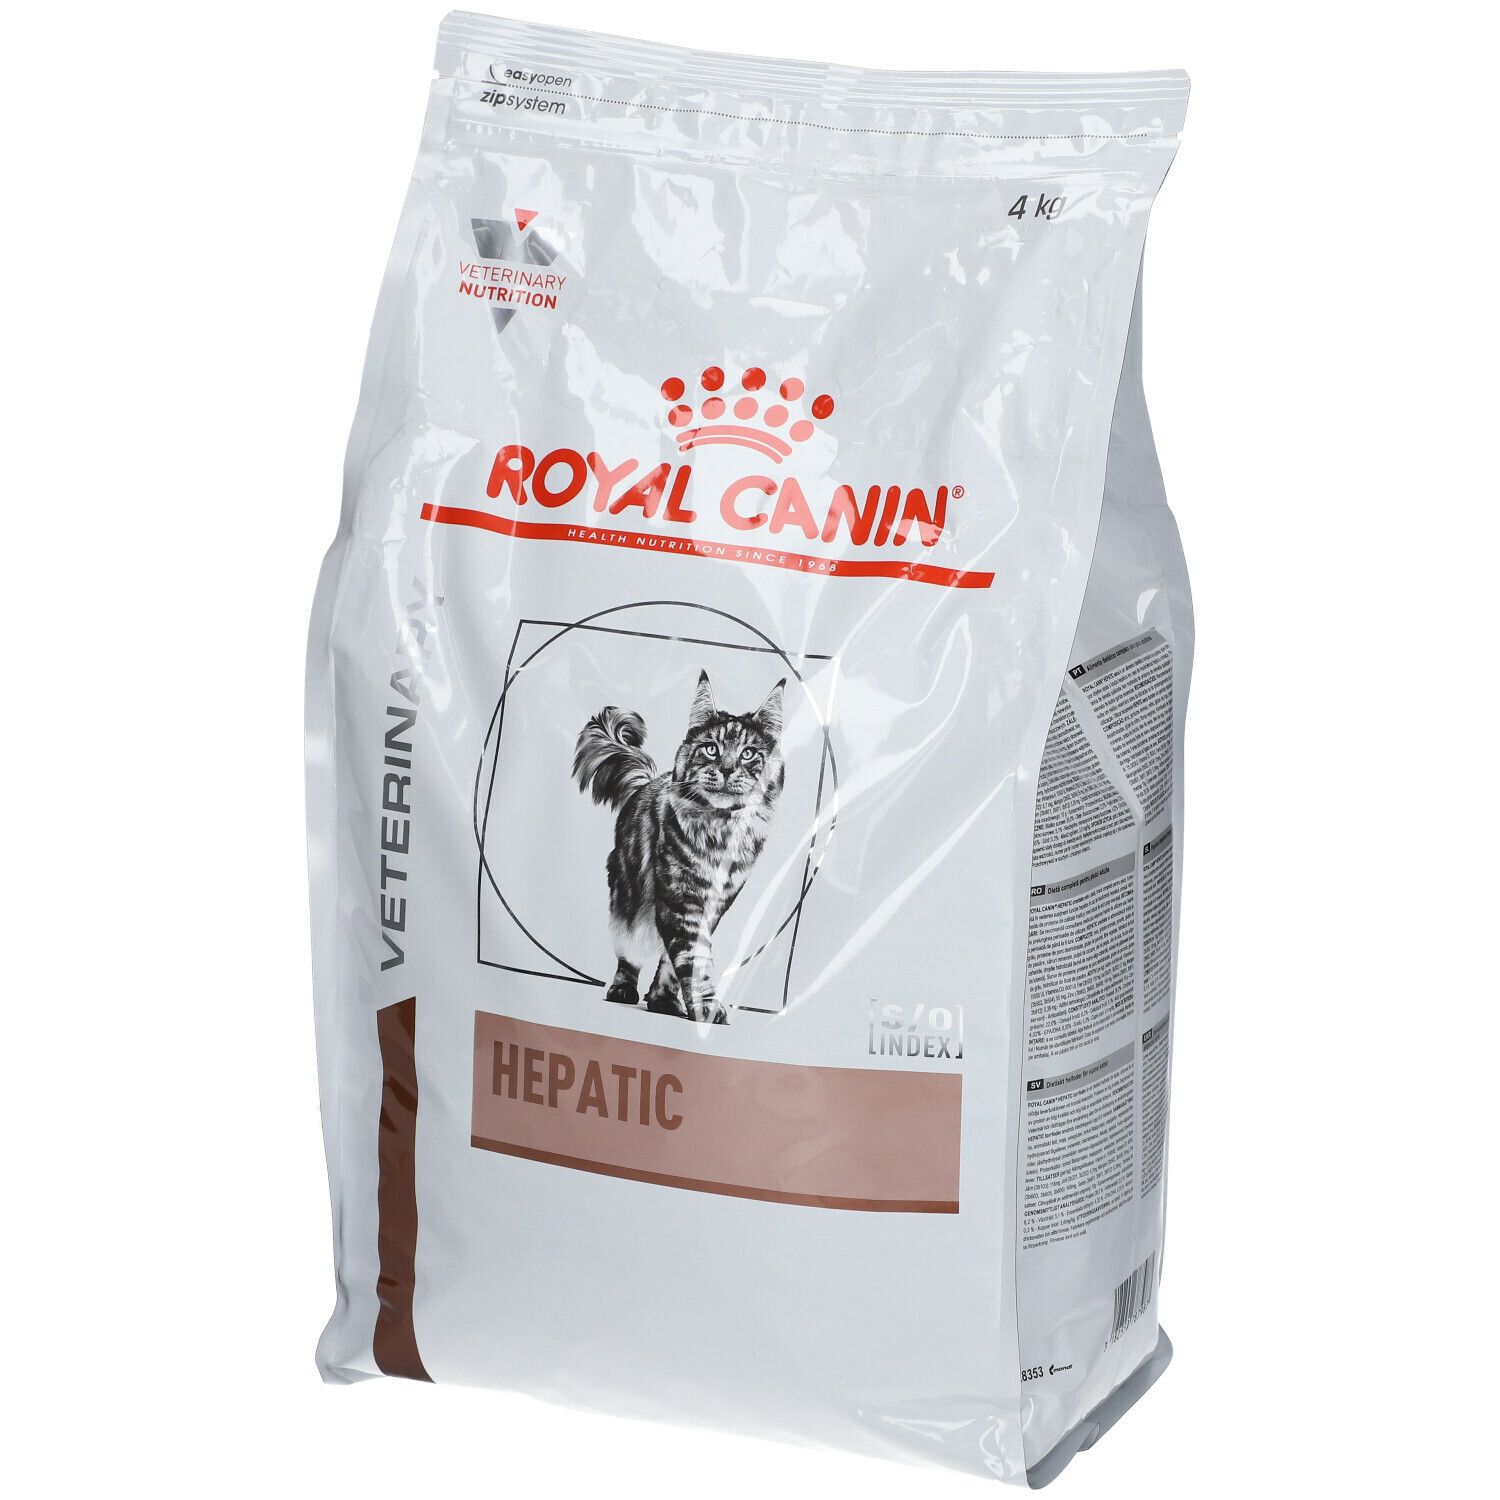 Royal Canin® Hepatic